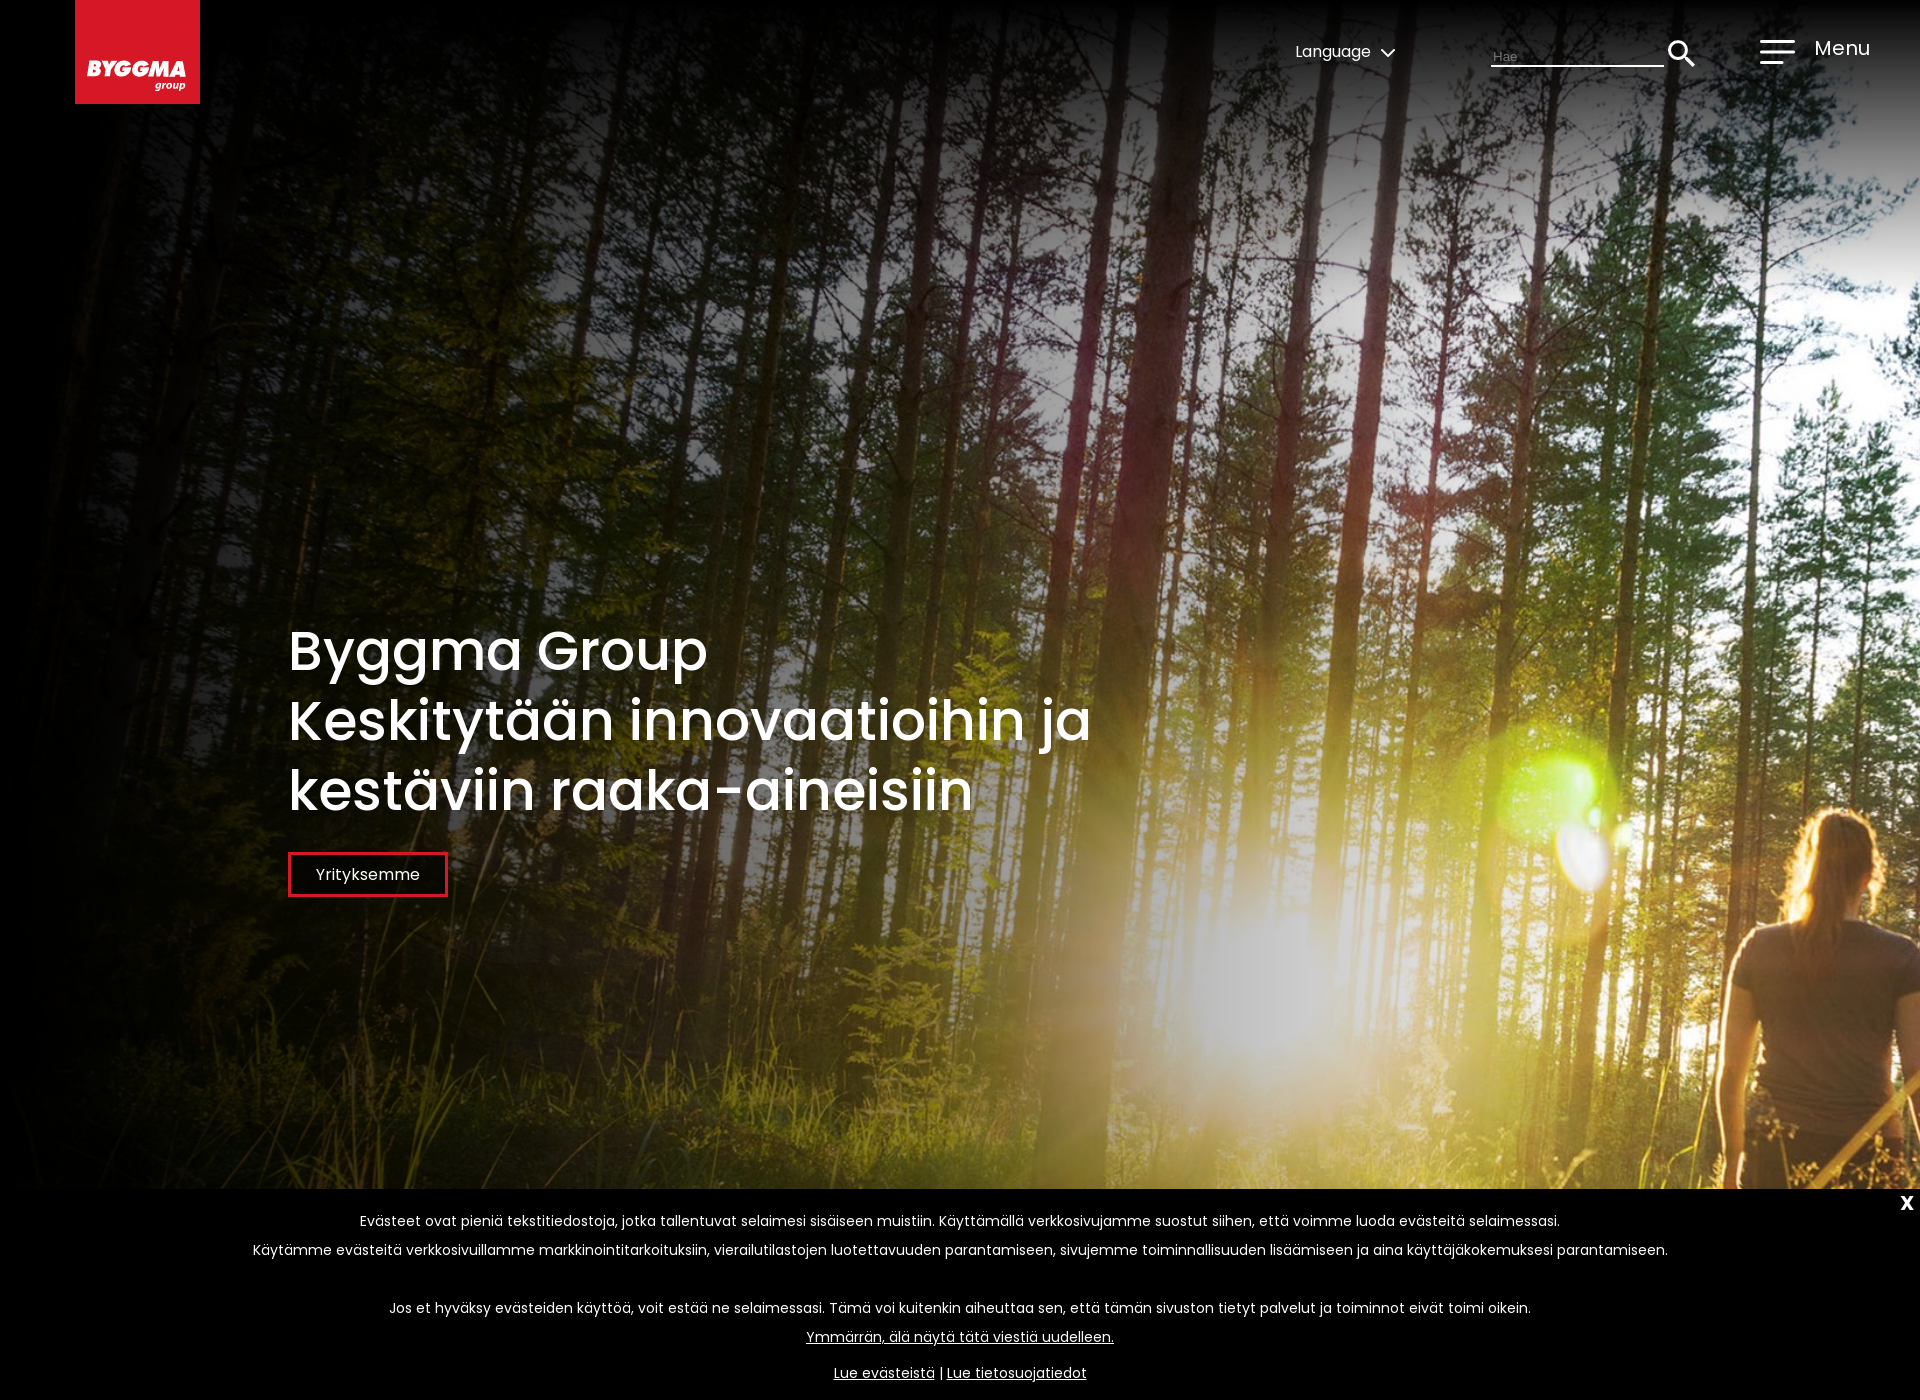 Näyttökuva byggmagroup.fi